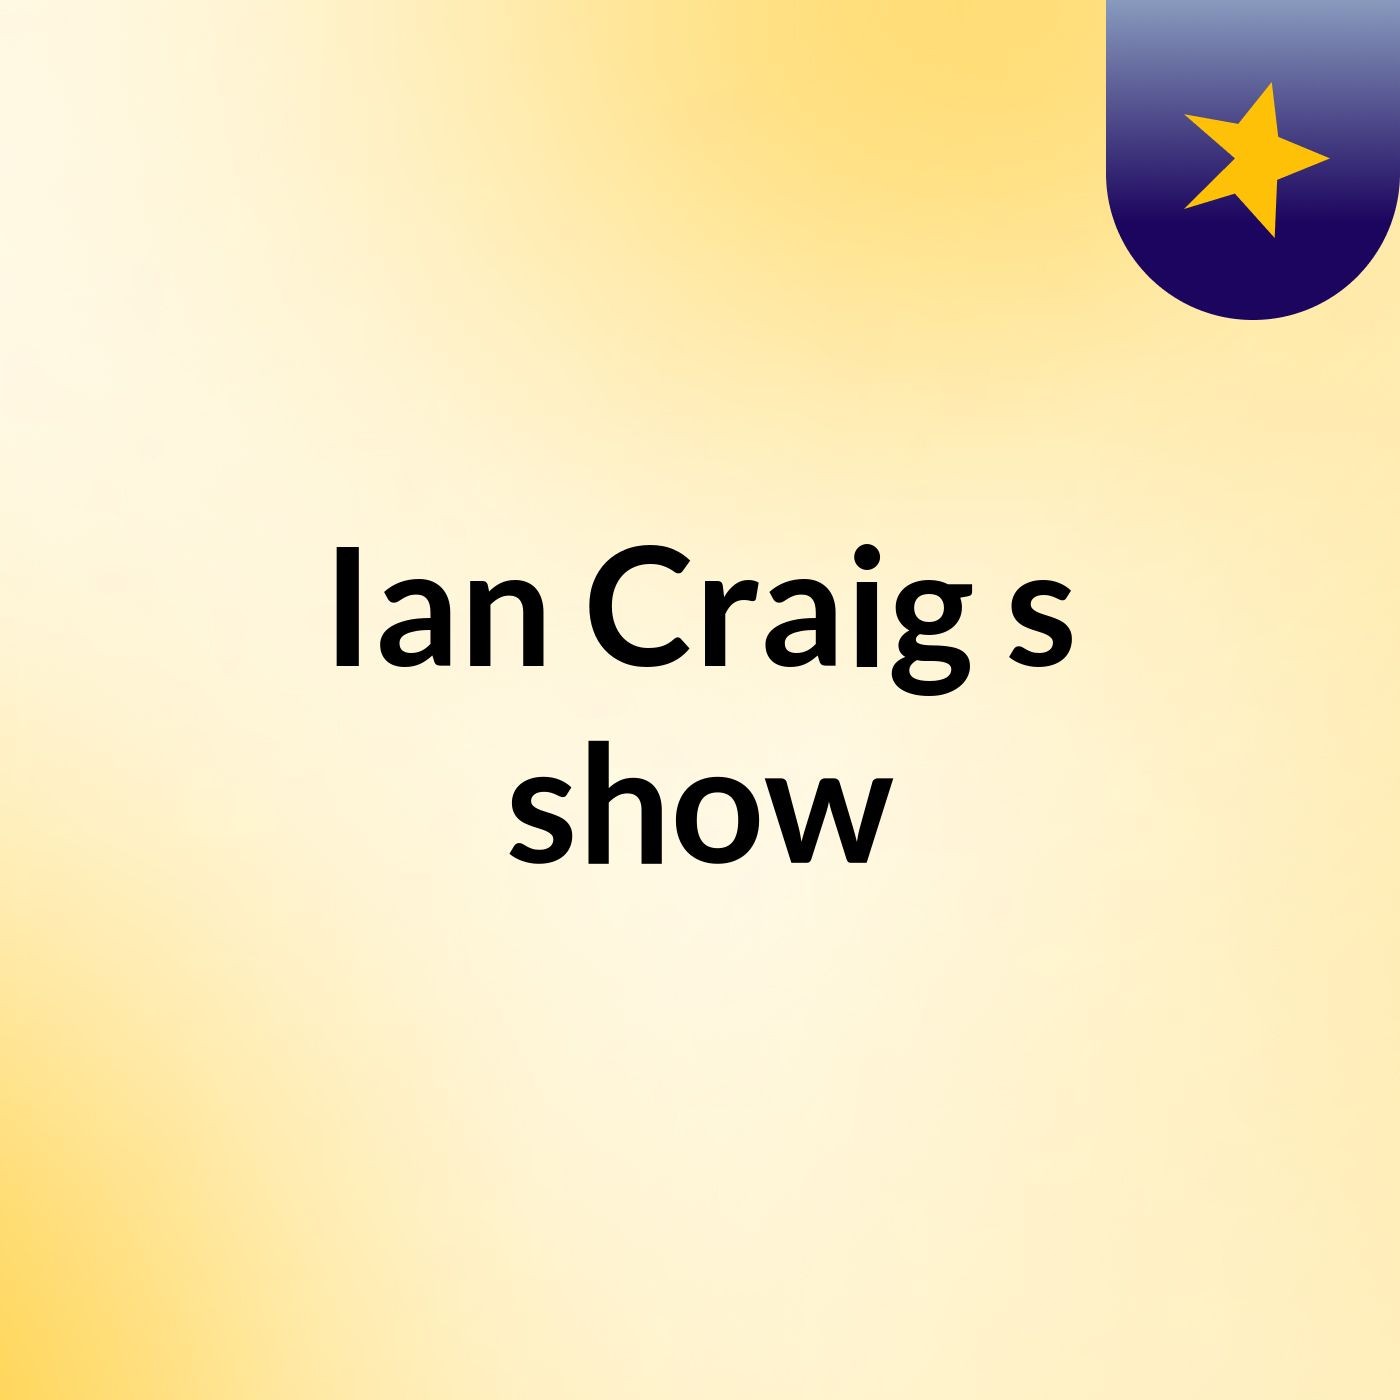 Ian Craig's show